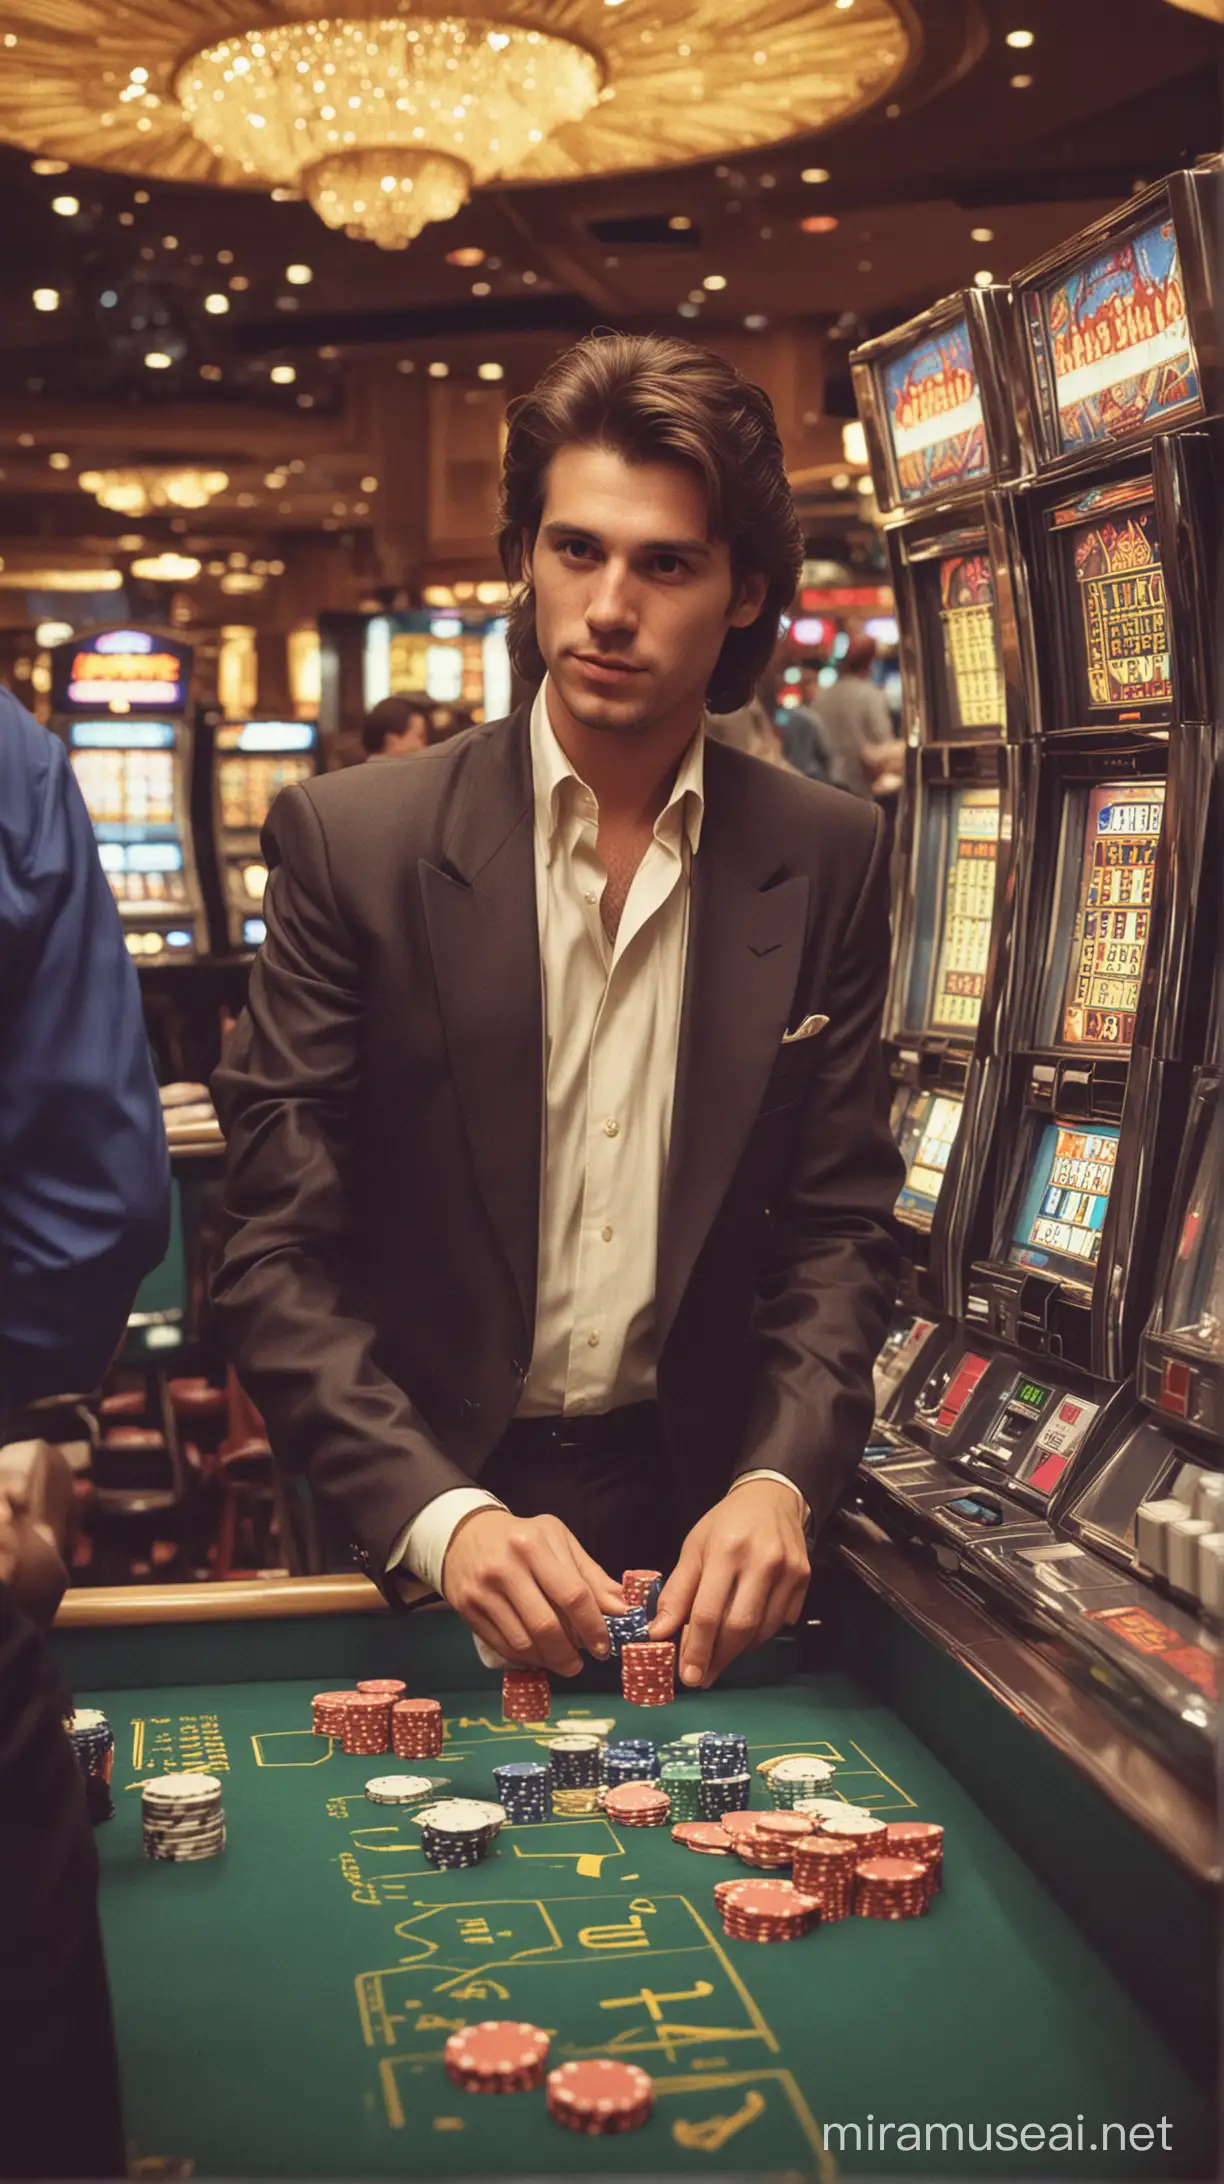 1980s Las Vegas Casino Gambler in Vintage Style